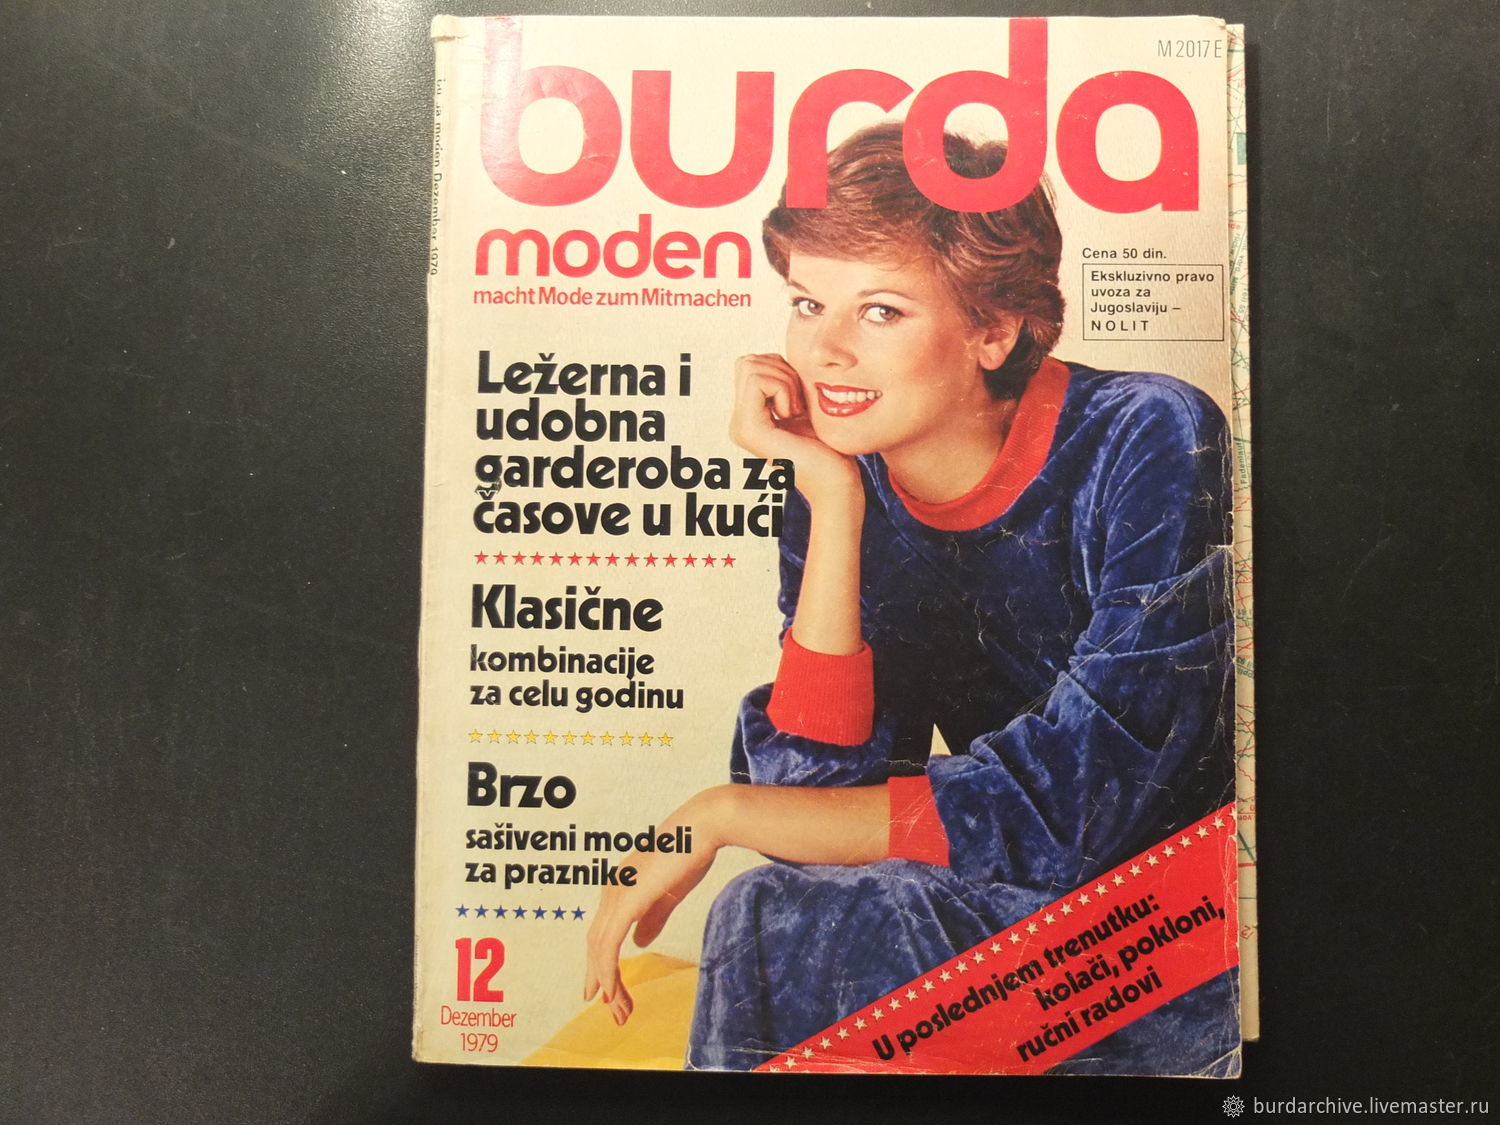 Винтаж: Бурда моден 1979/12 Burda moden, Журналы винтажные, Марибор,  Фото №1